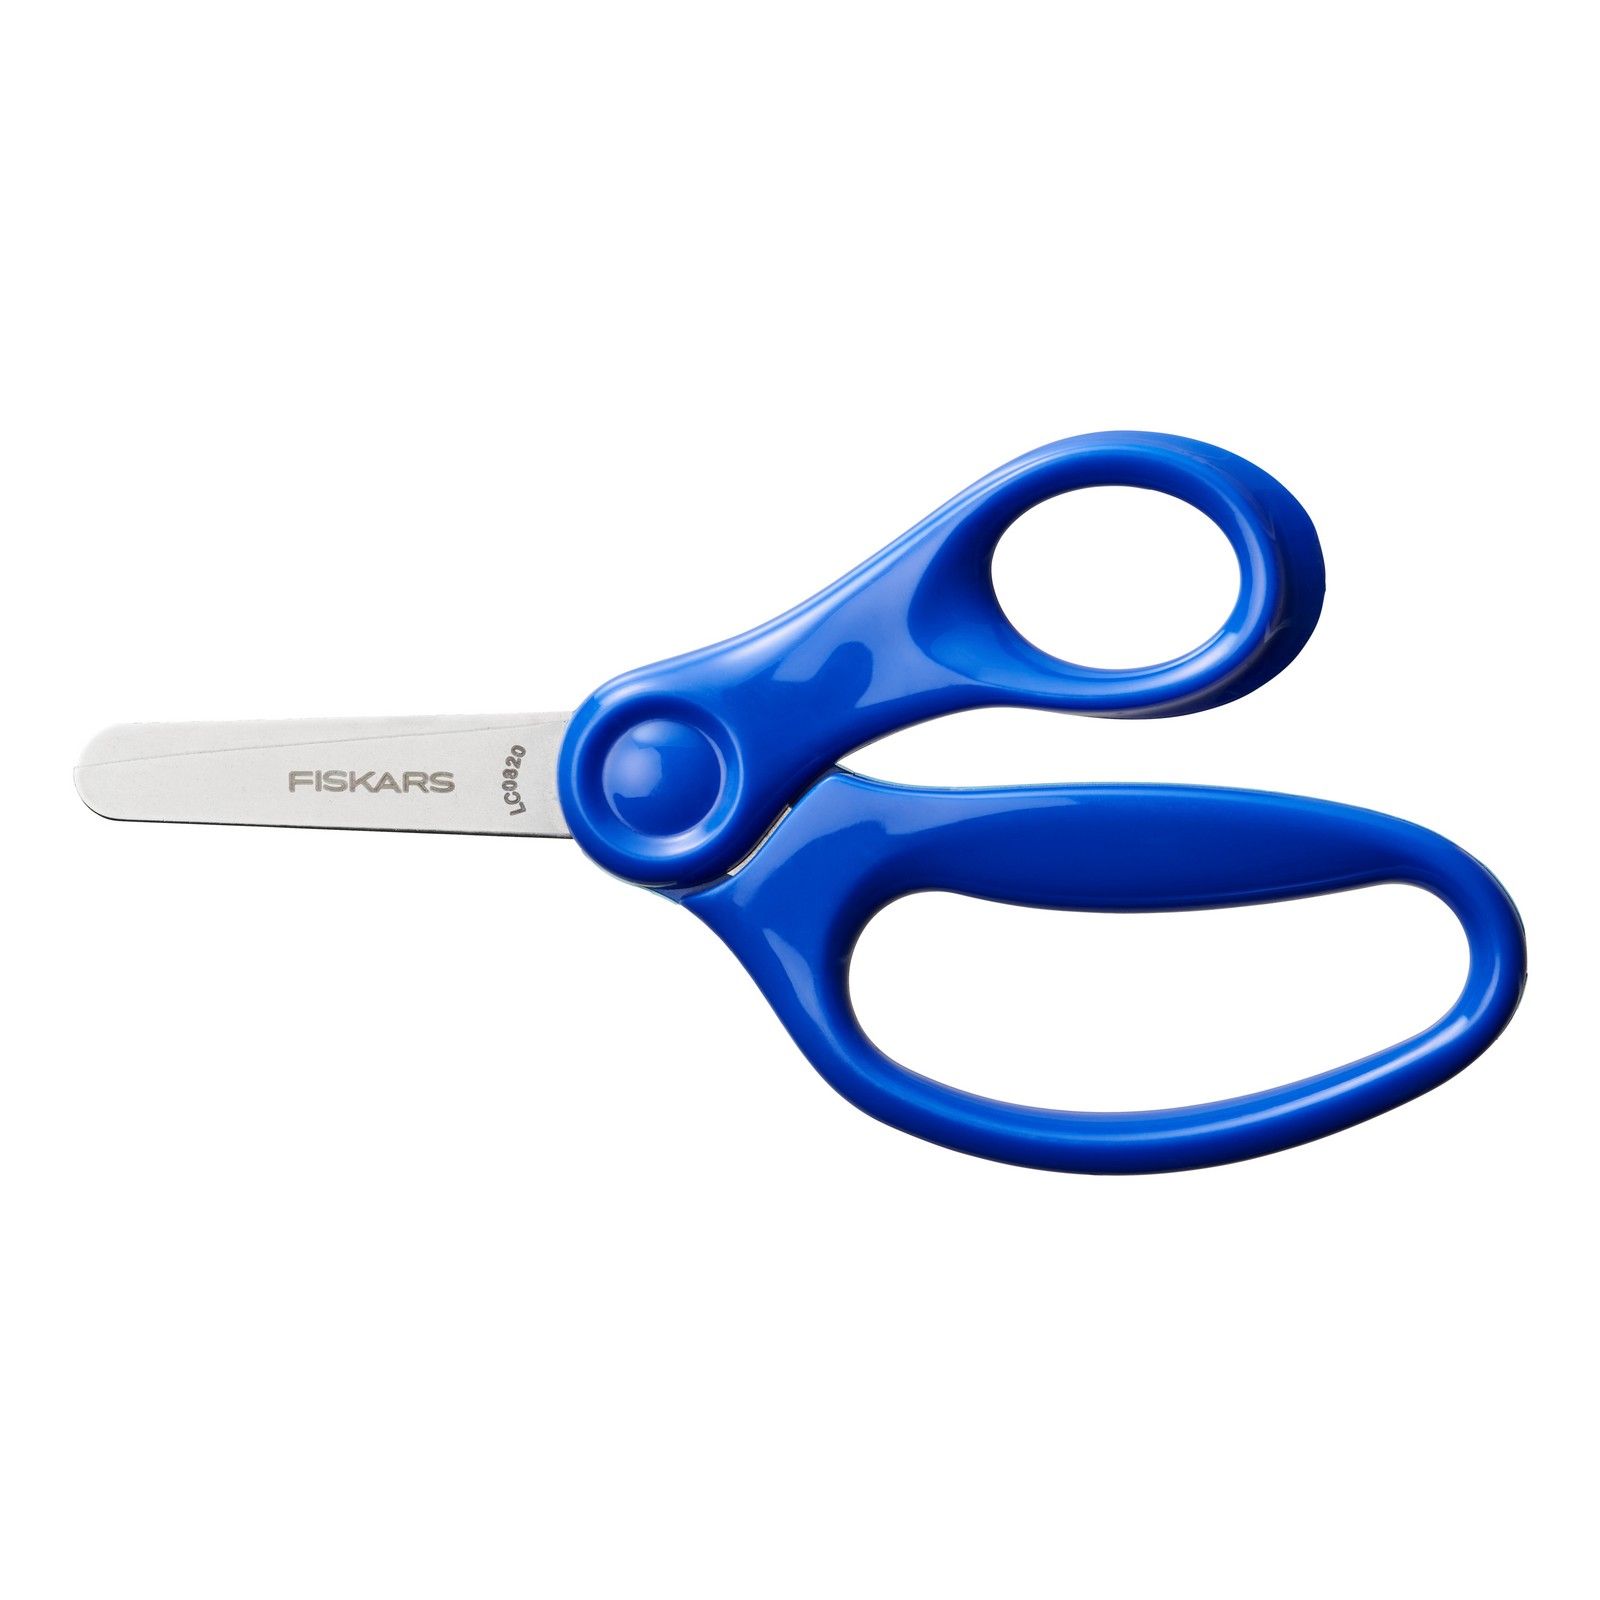 Fiskars • Blunt-tip Kids Scissors Blue for +6 years old